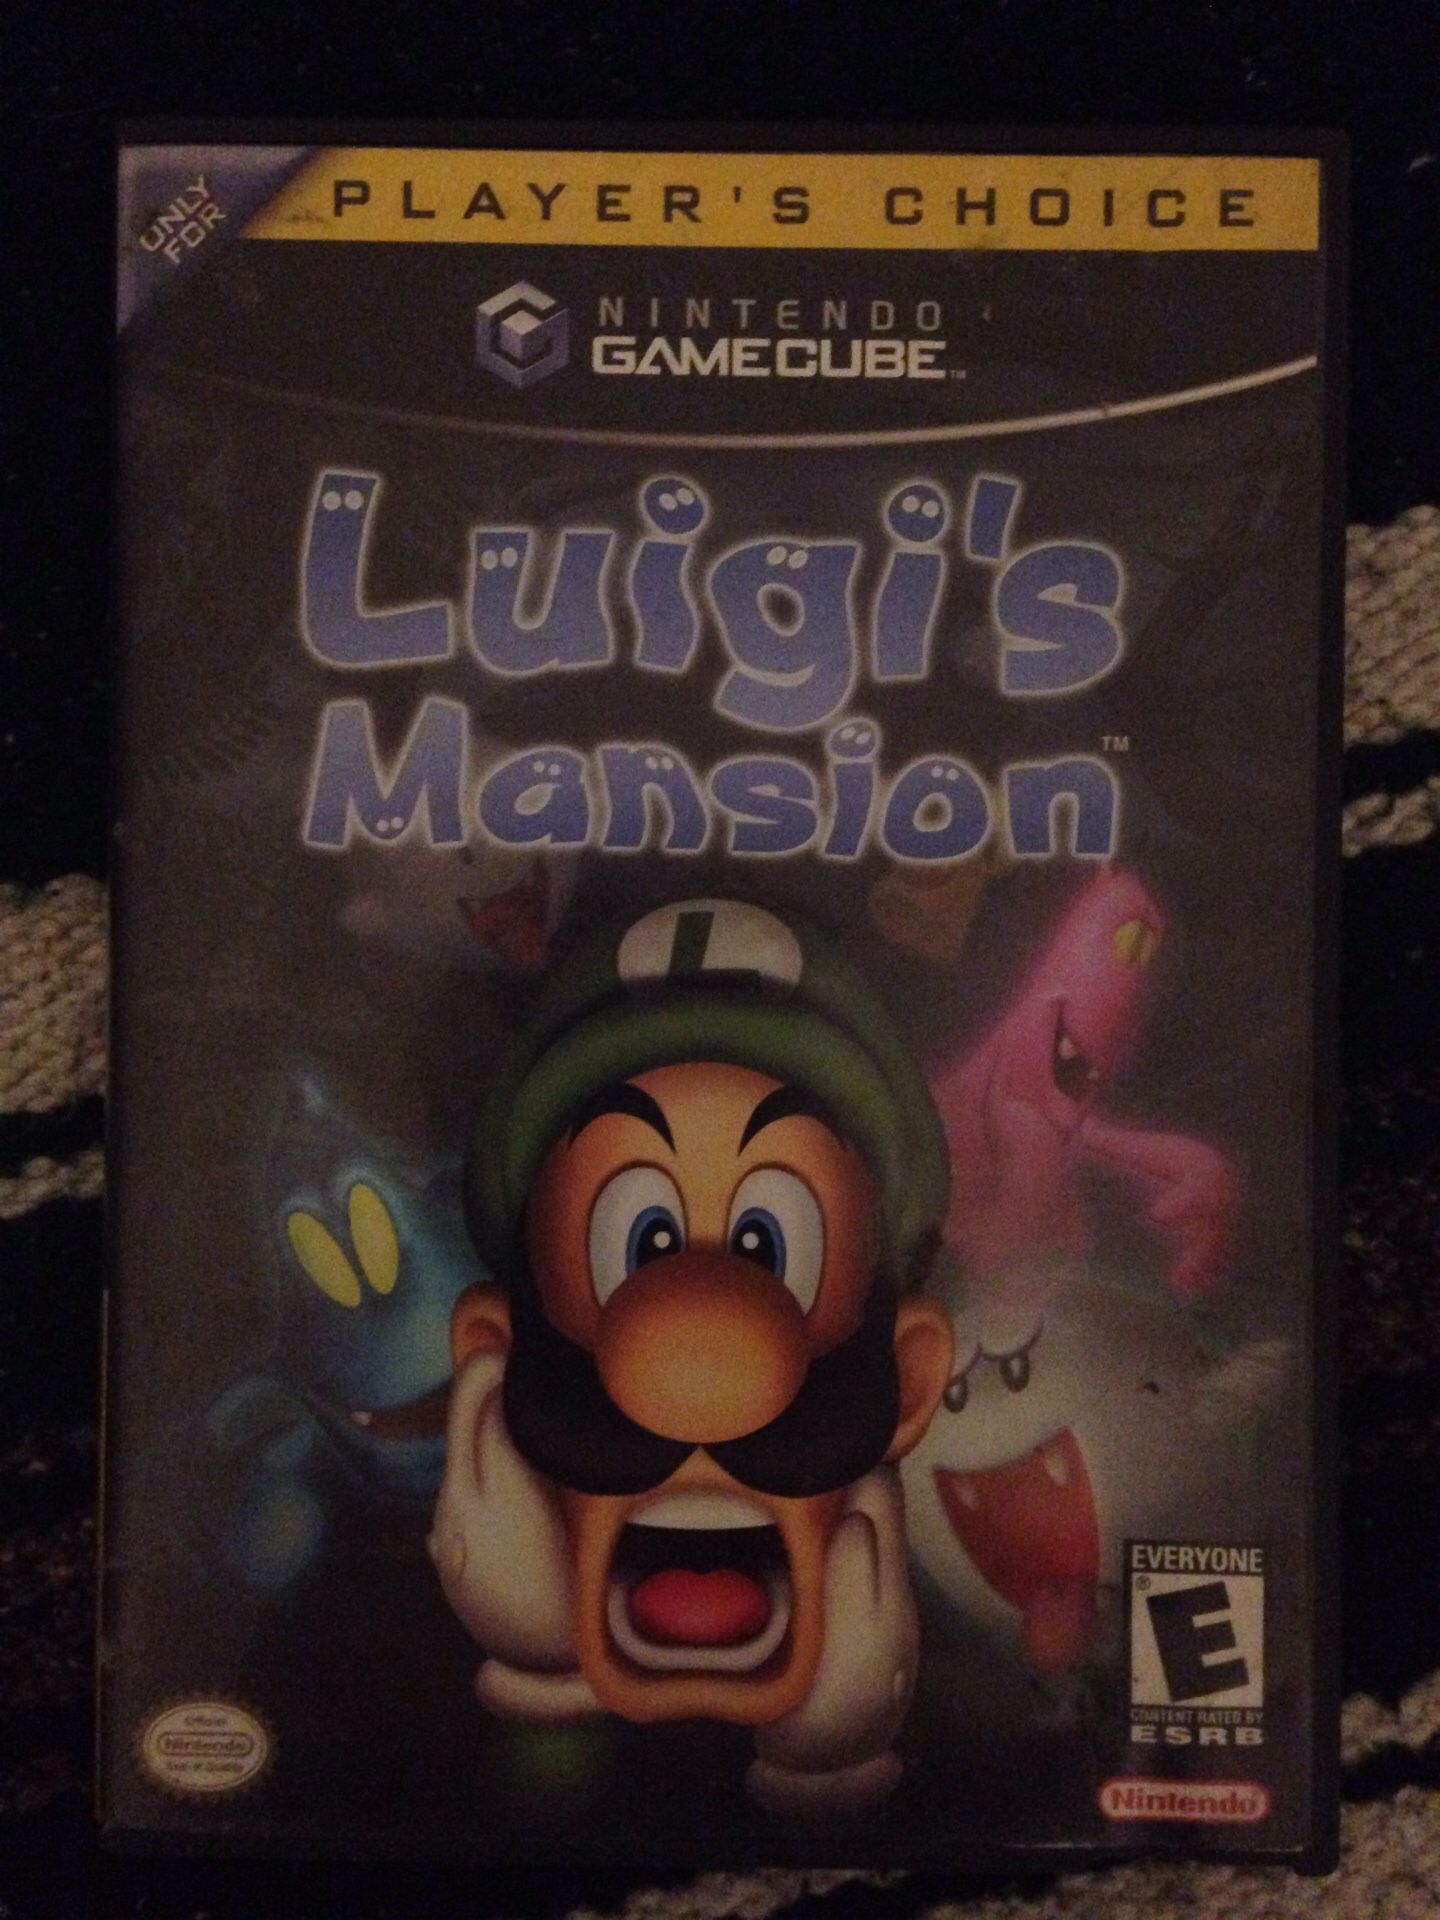 Luigi's Mansion exclusively for the Nintendo GameCube